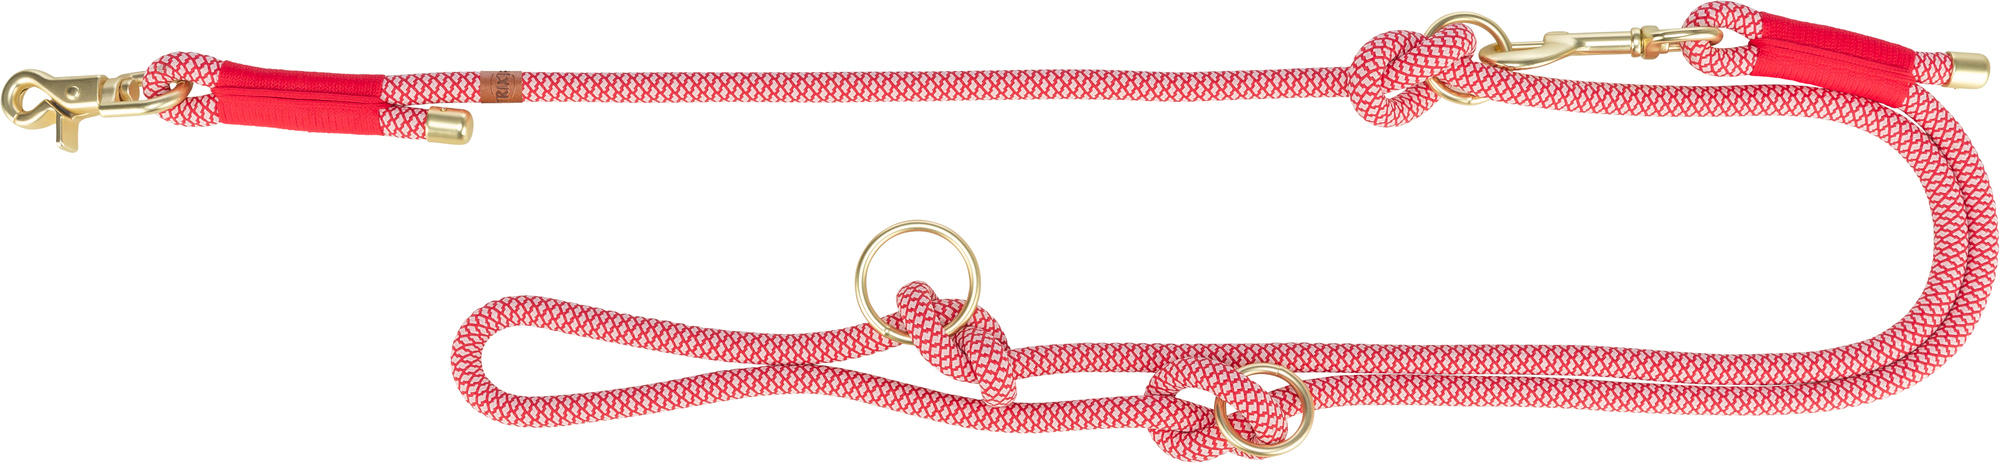 Correa Soft Rope Trixie - 2m - varios colores disponibles